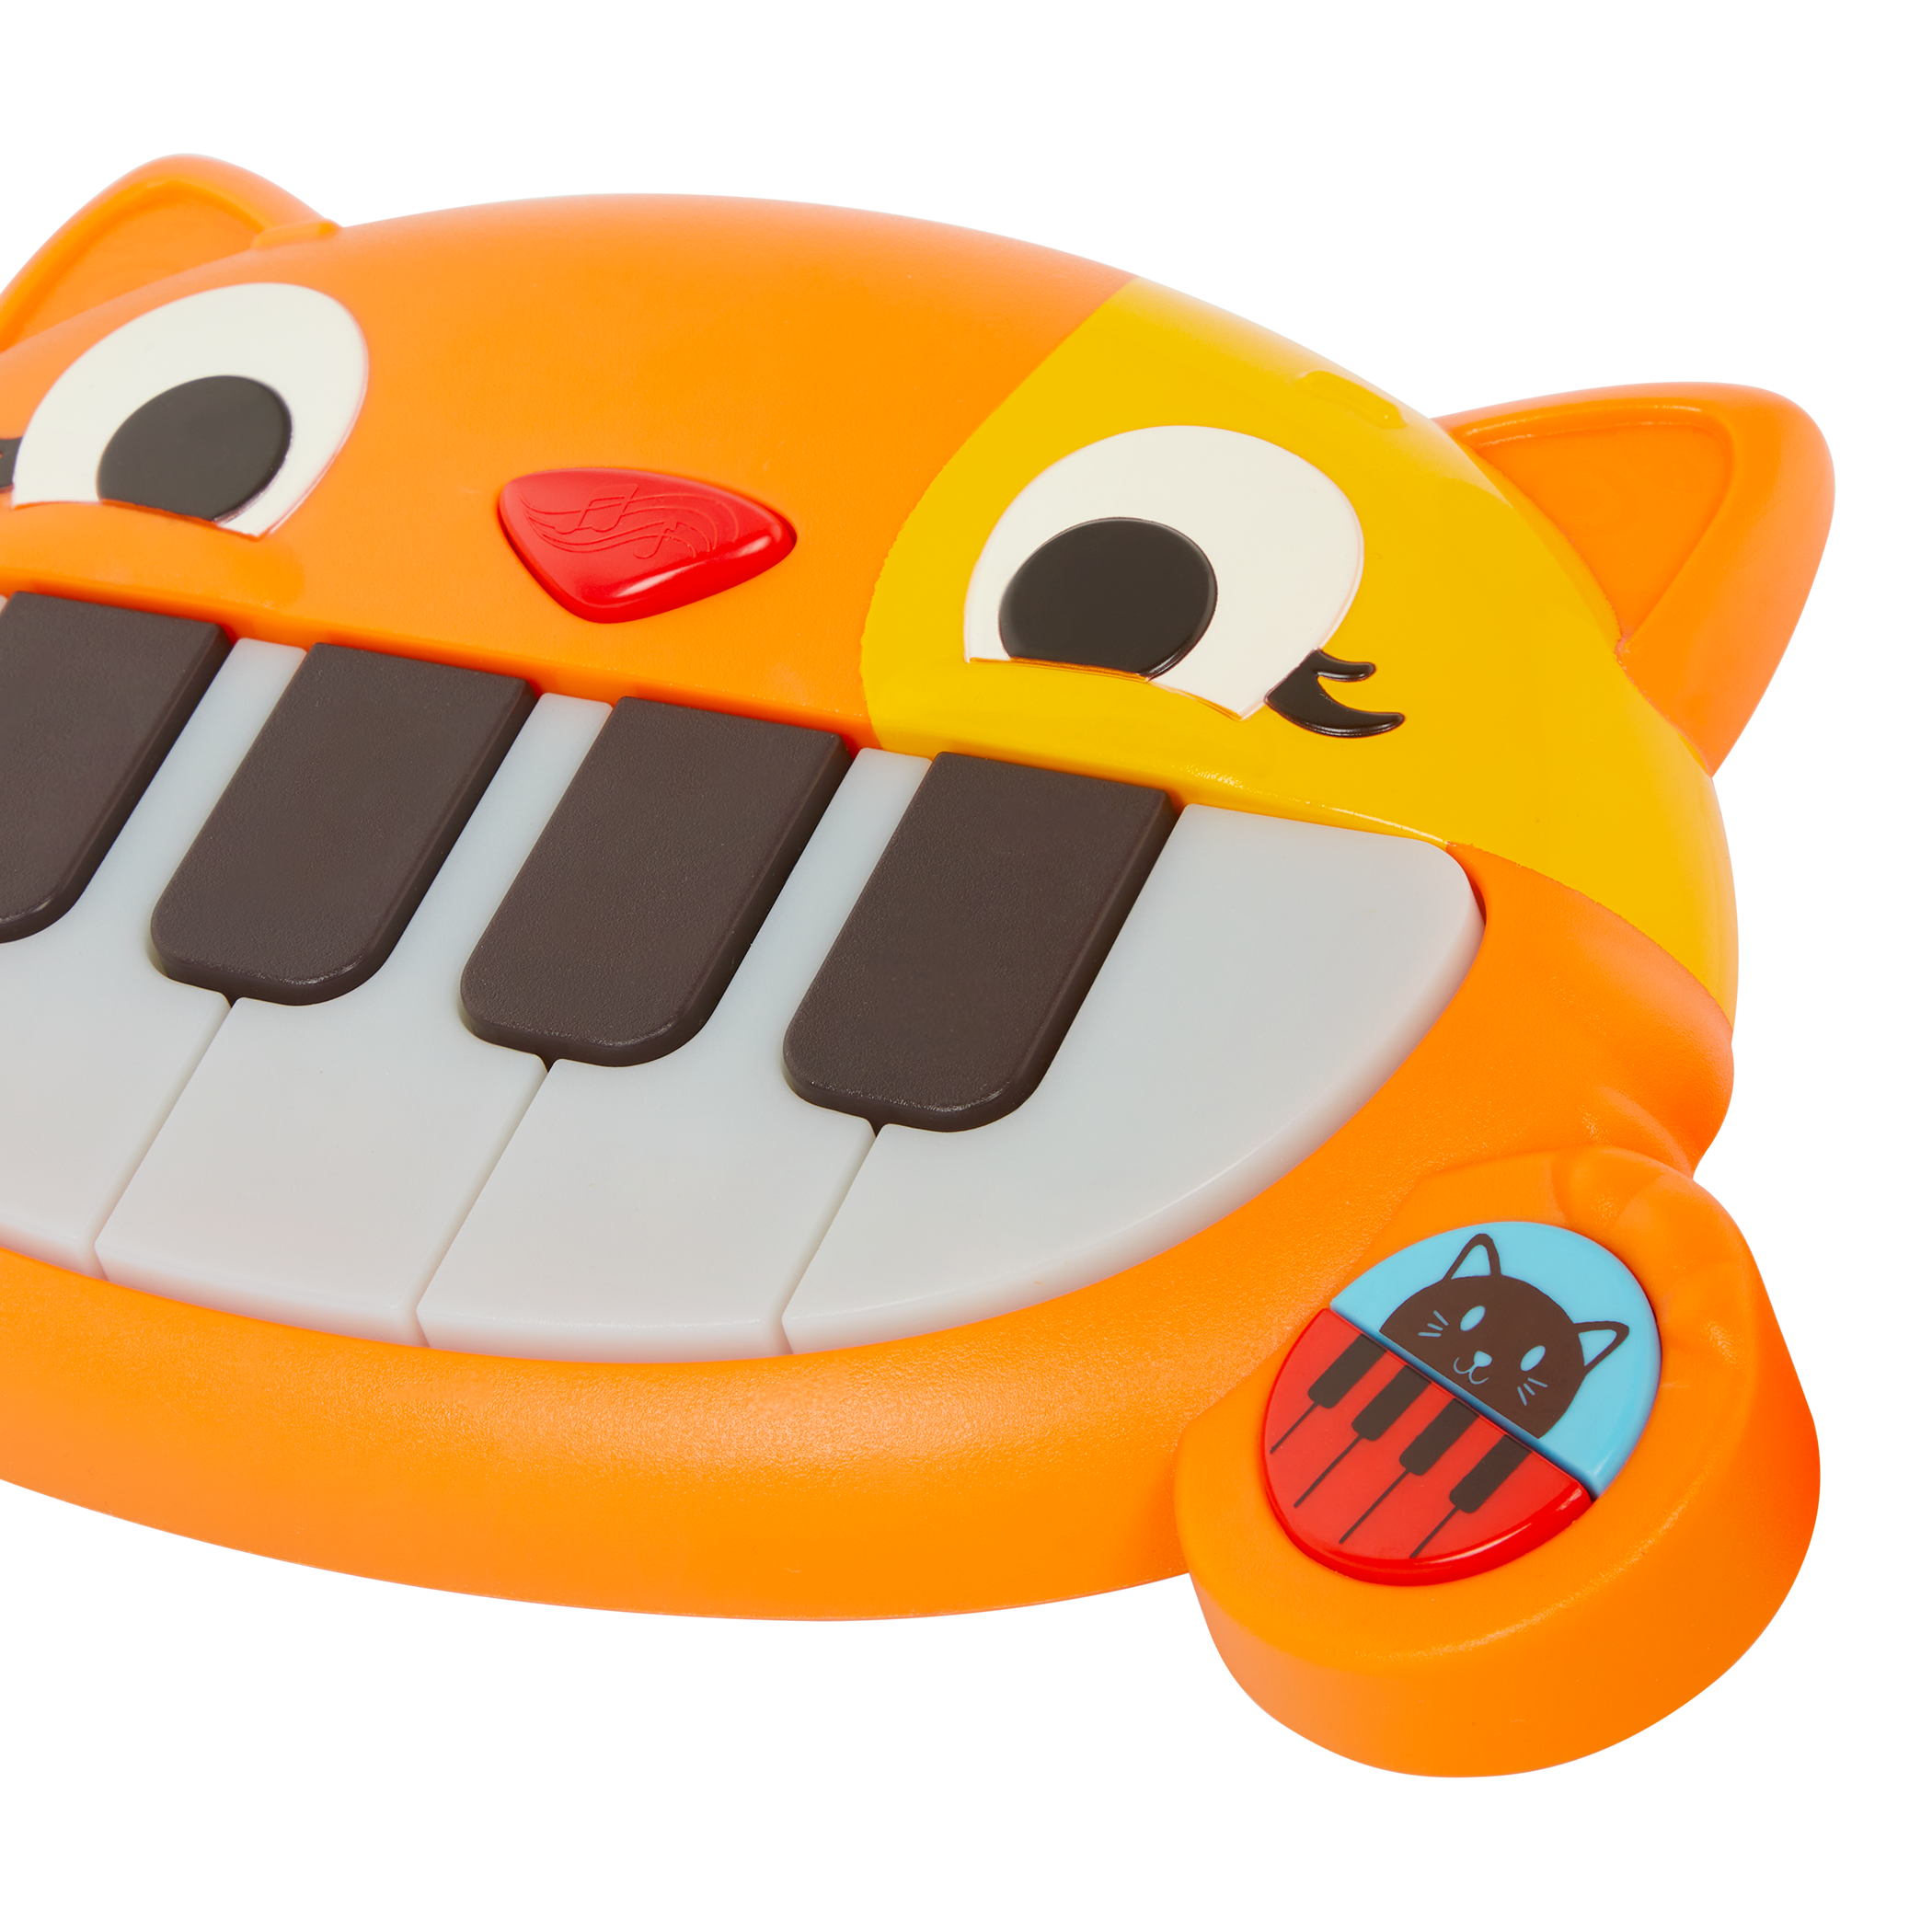 Mini Meowsic, Toy Cat Keyboard